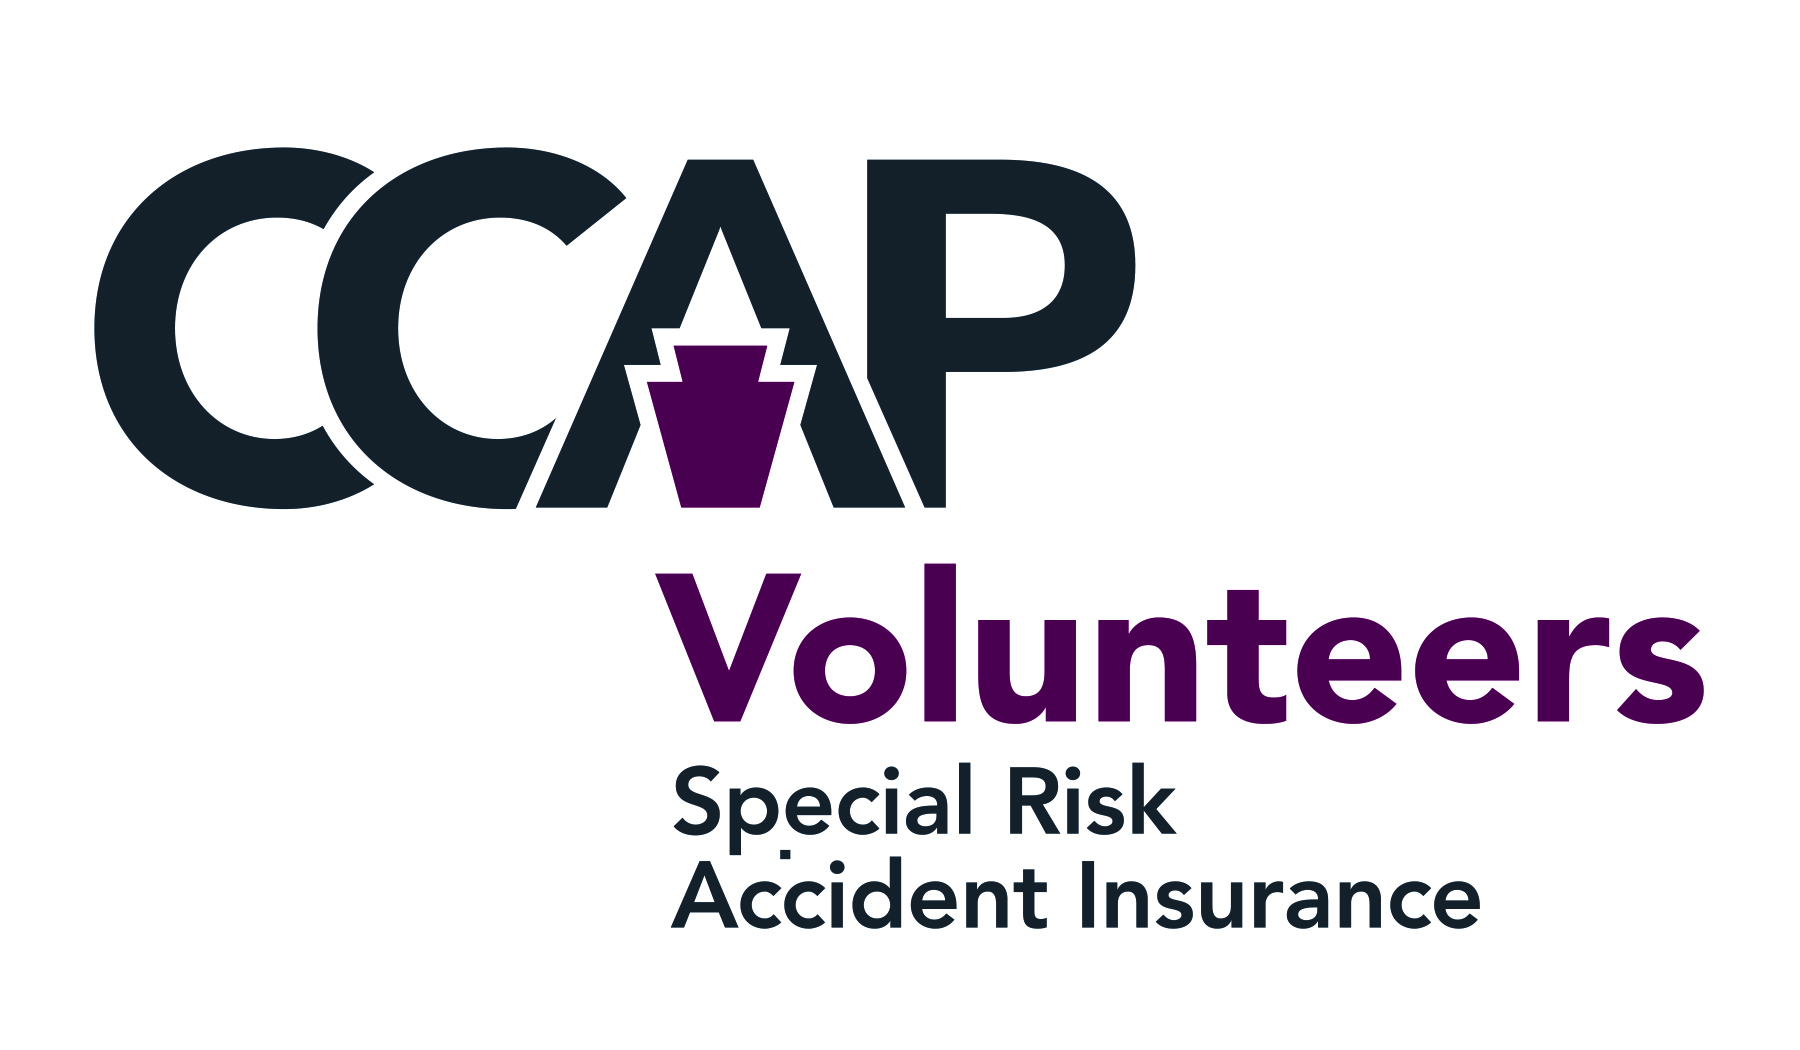 CCAP Volunteers Special Risk Accident Insurance logo